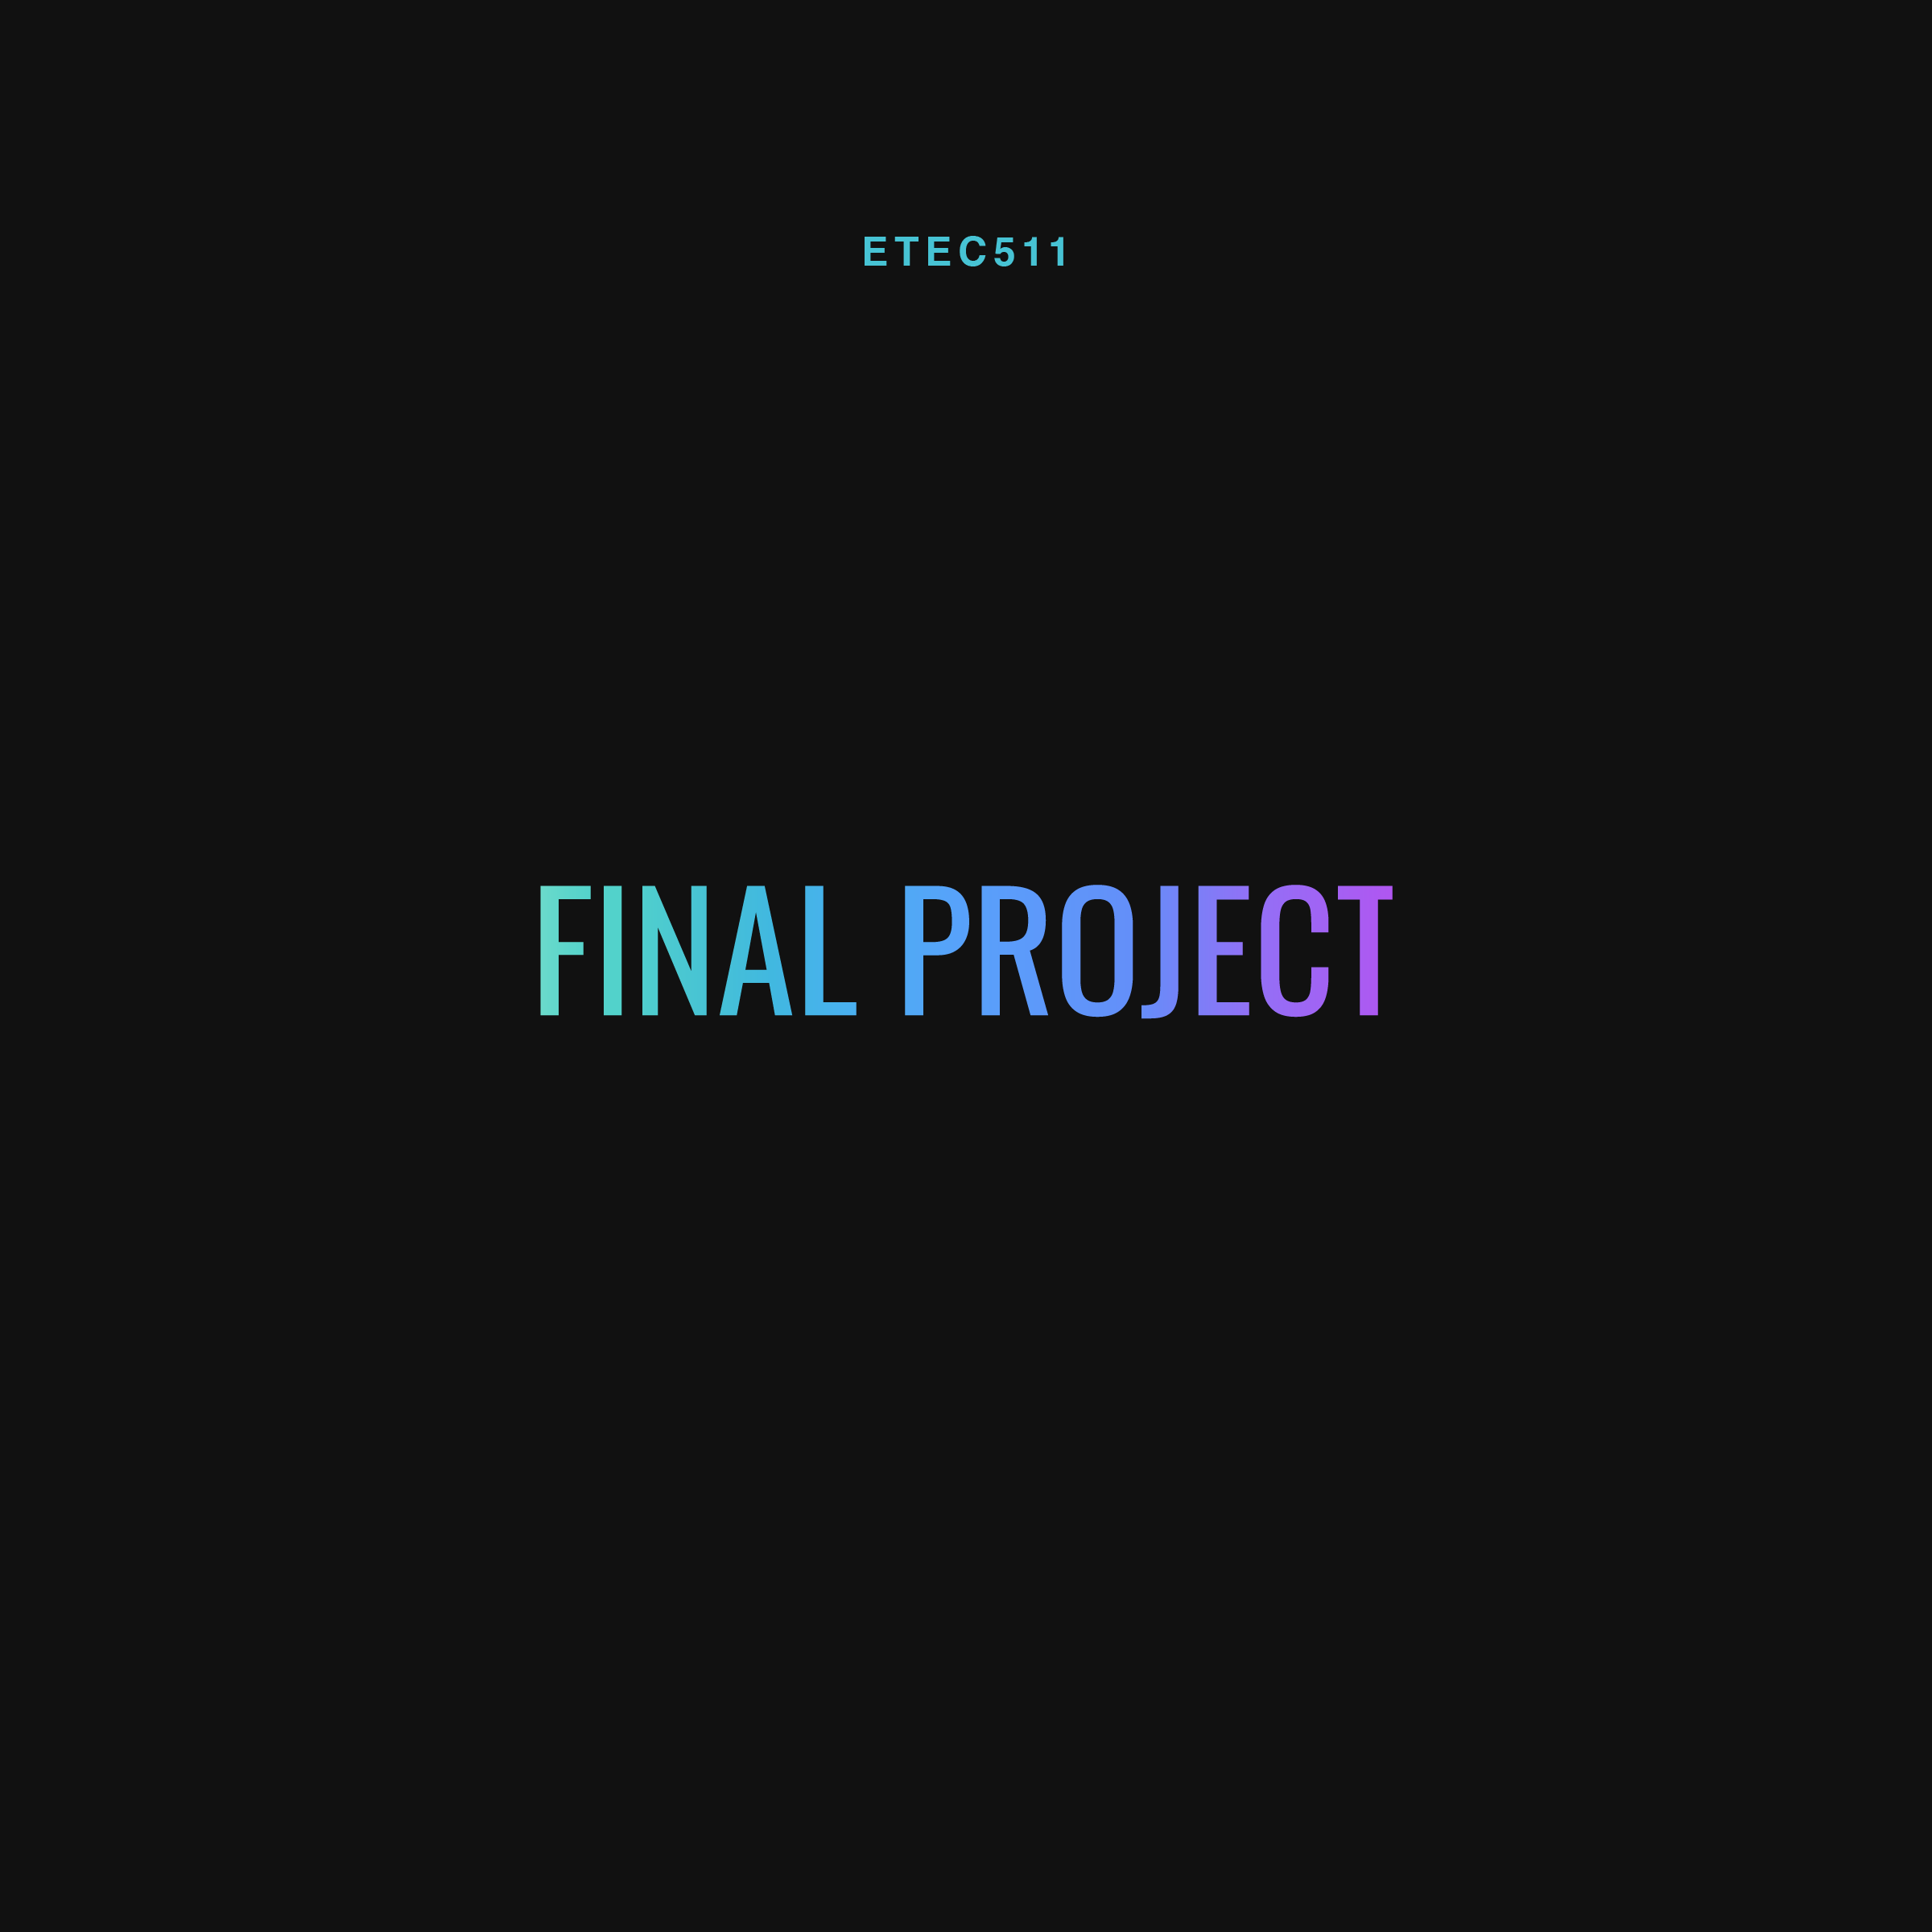 ETEC 511 Final Project